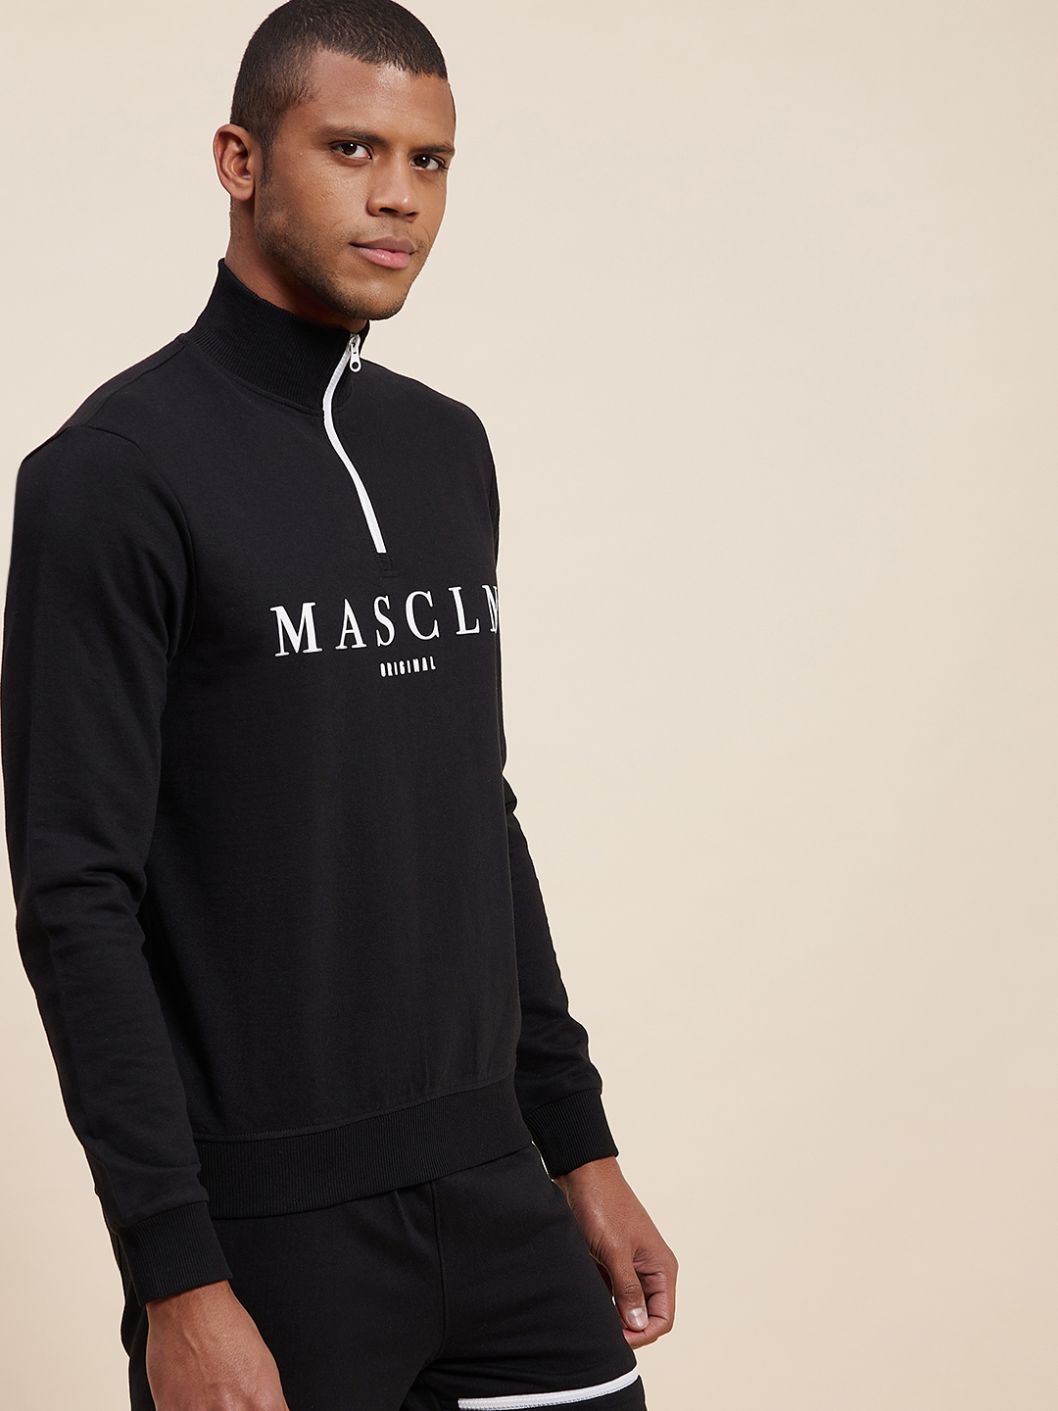 Men's Black High Neck Half Zipper MASCLN Sweatshirt